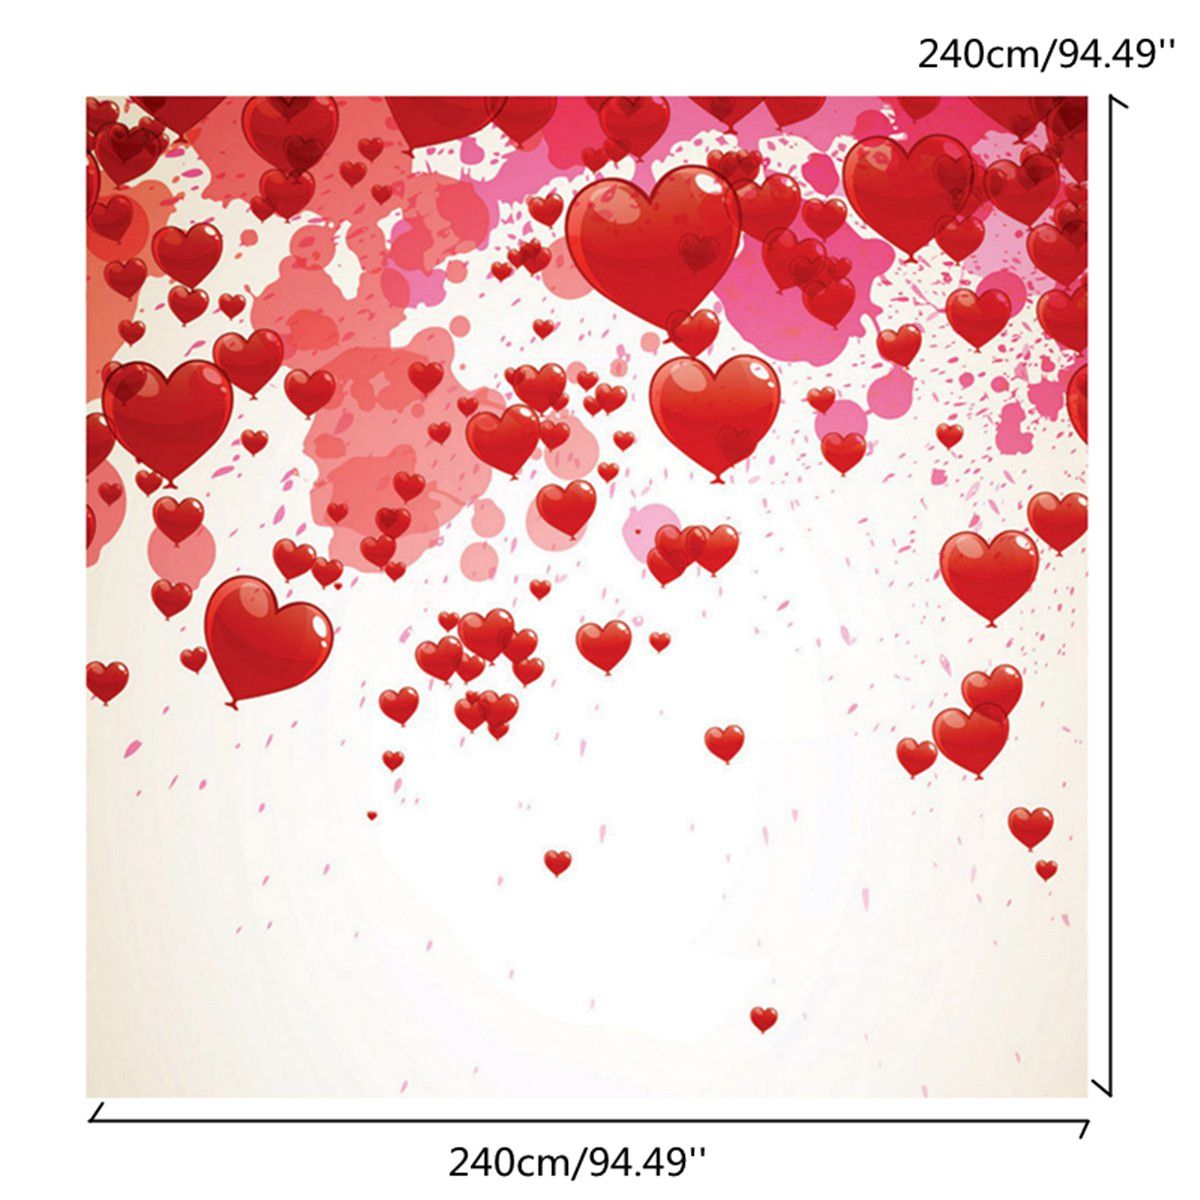 8X8FT-Vinyl-Love-Heart-Photography-Background-Studio-Backdrop-Wedding-Photo-Prop-1130359